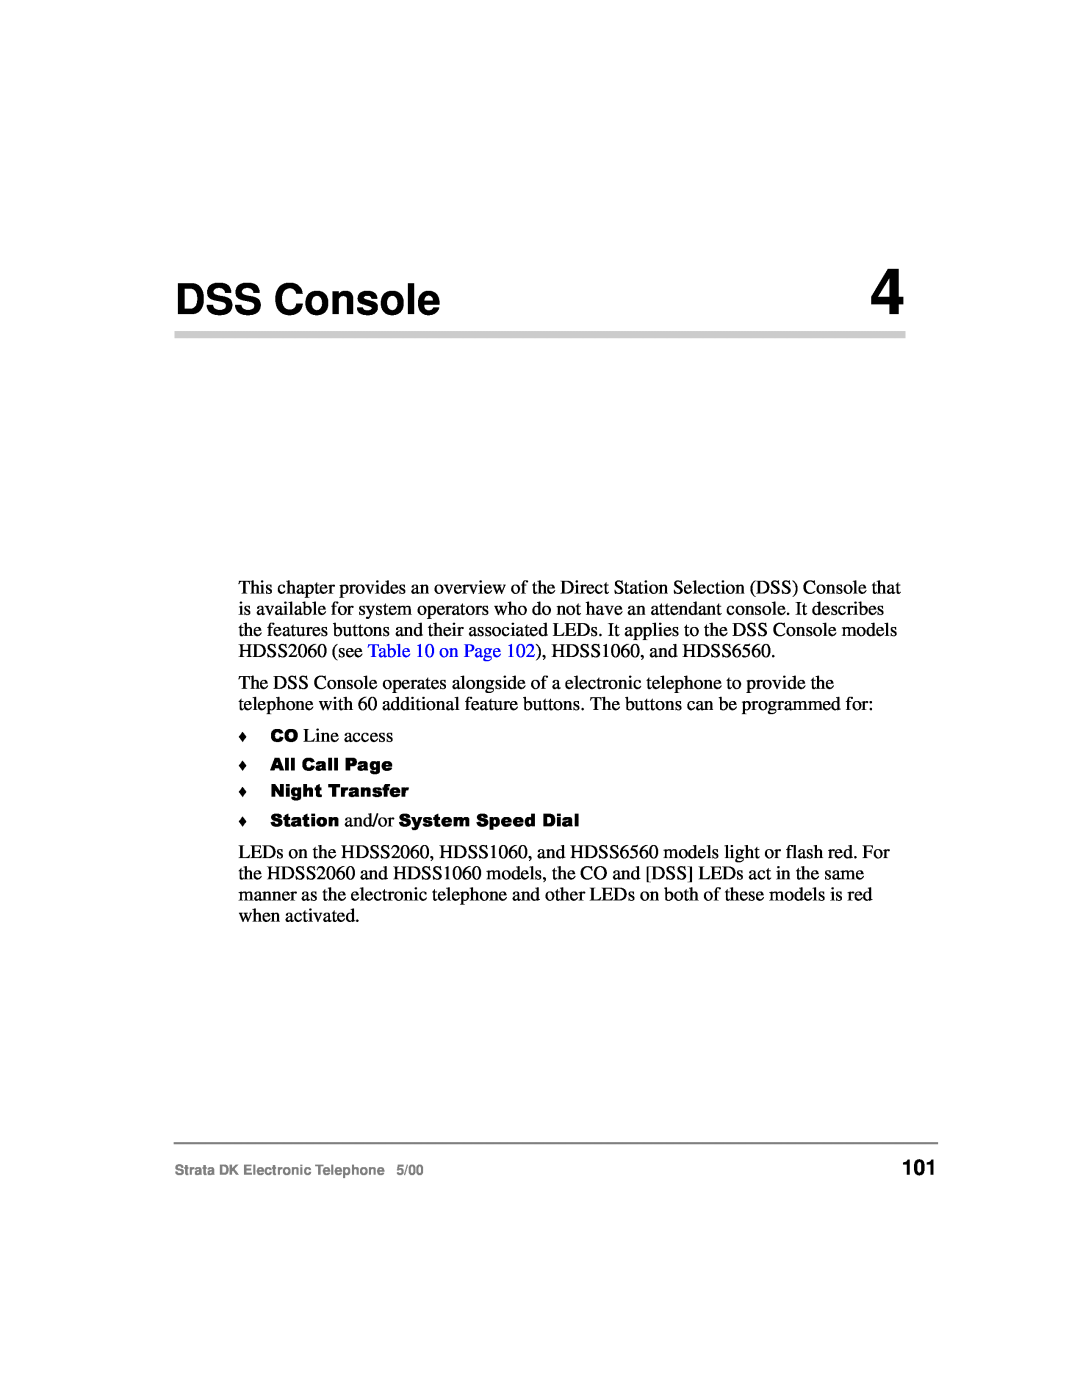 Toshiba Strata DK manual DSS Console 